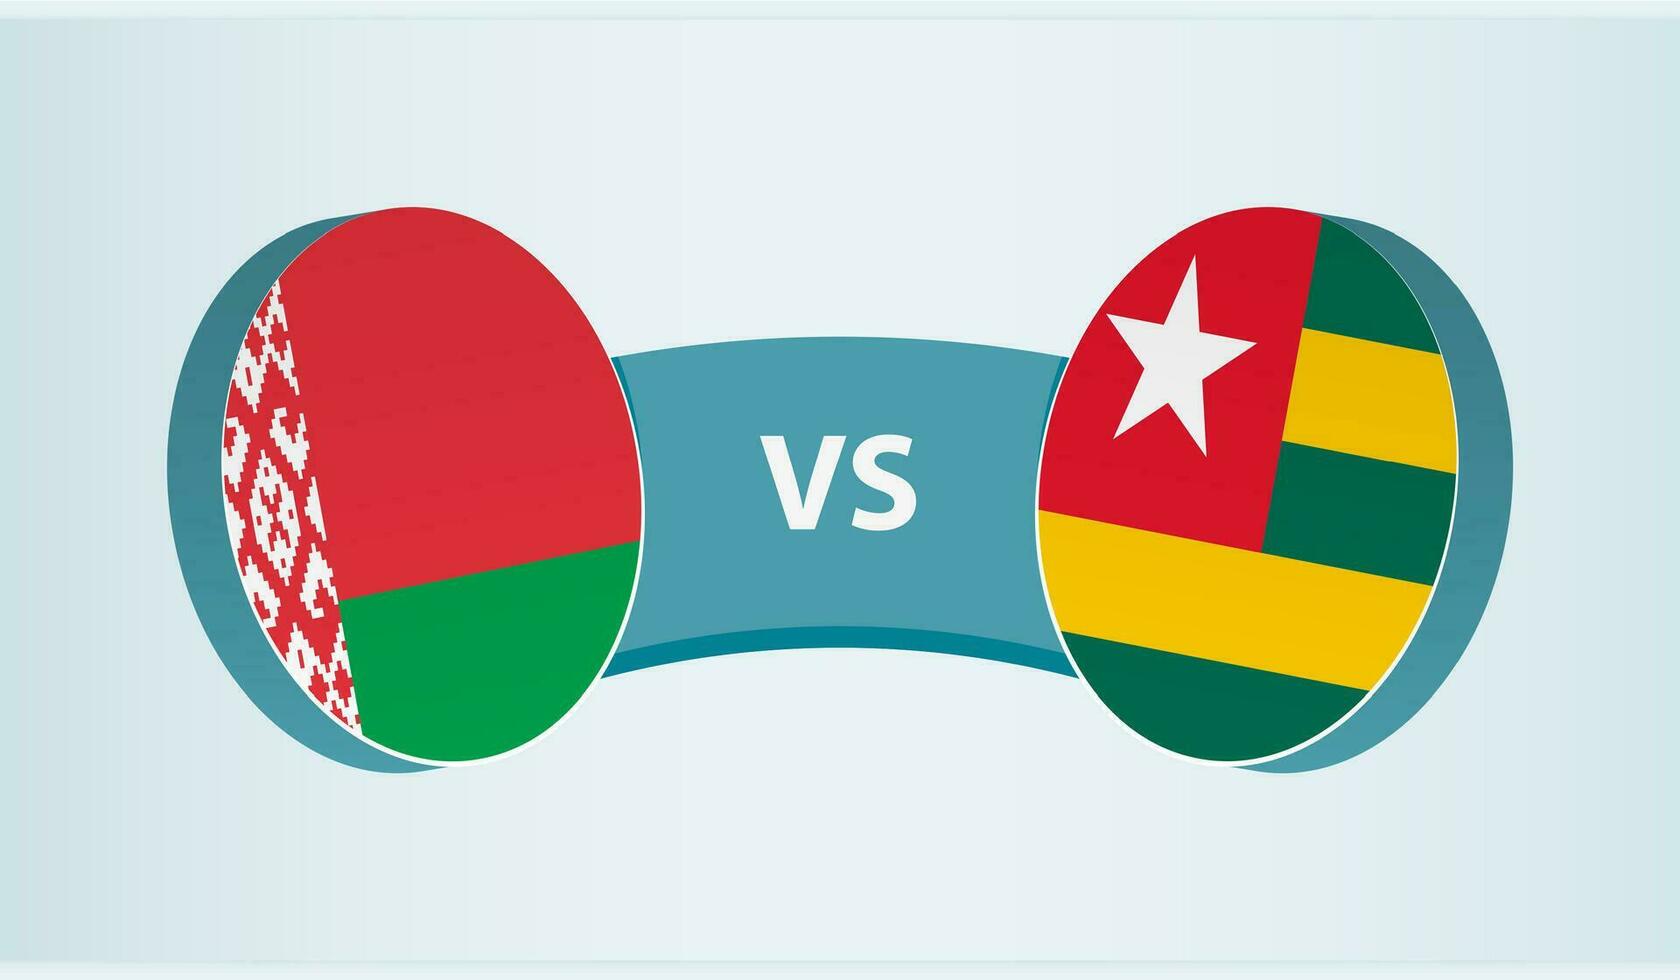 Belarus versus Togo, team sports competition concept. vector